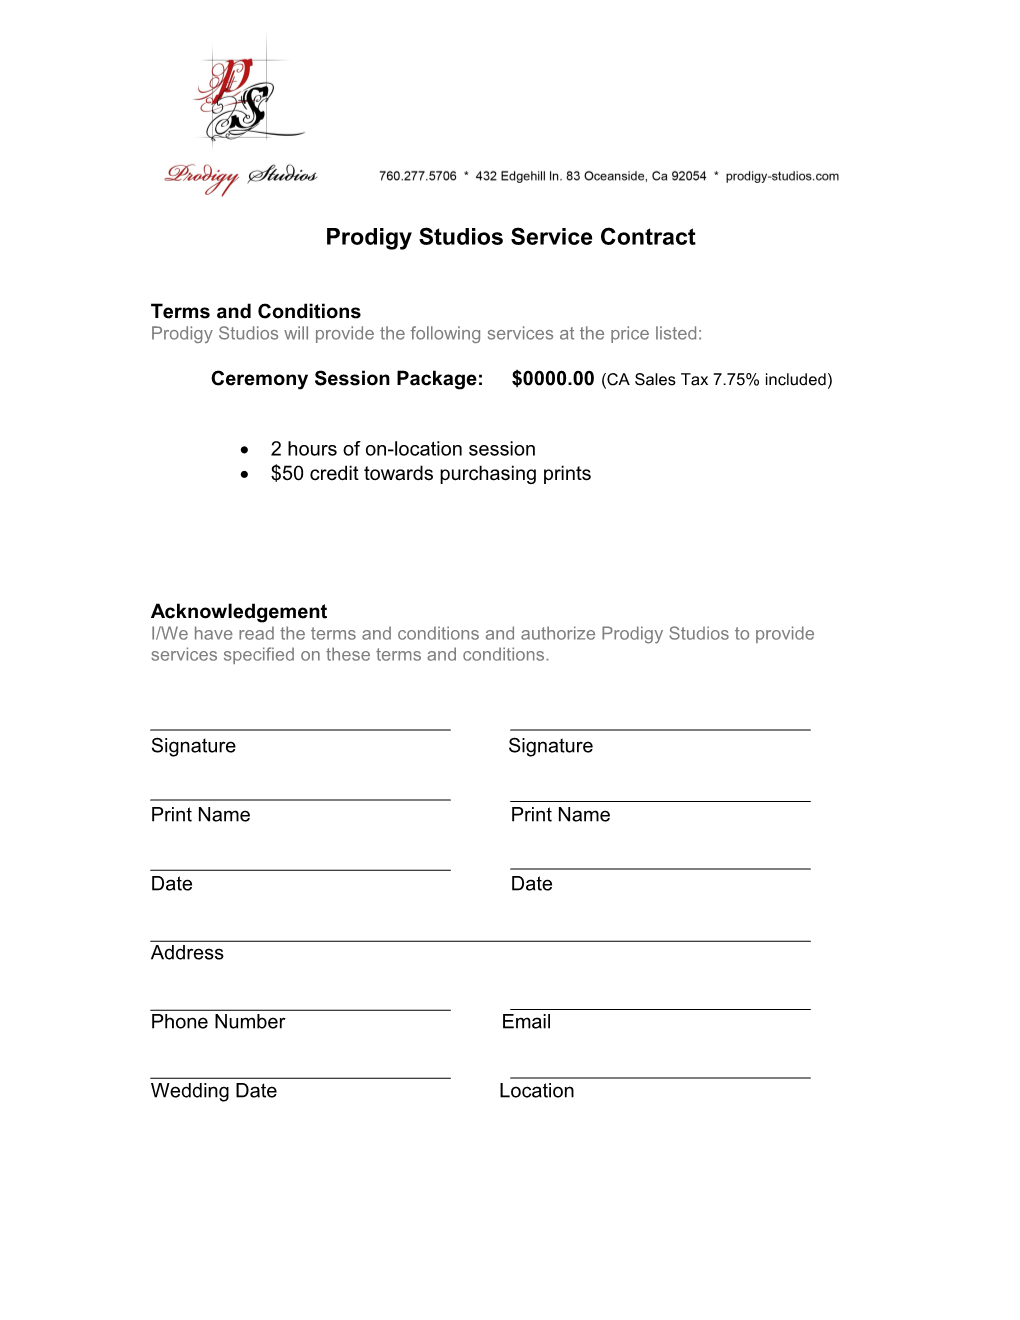 Prodigy Studios Service Contract